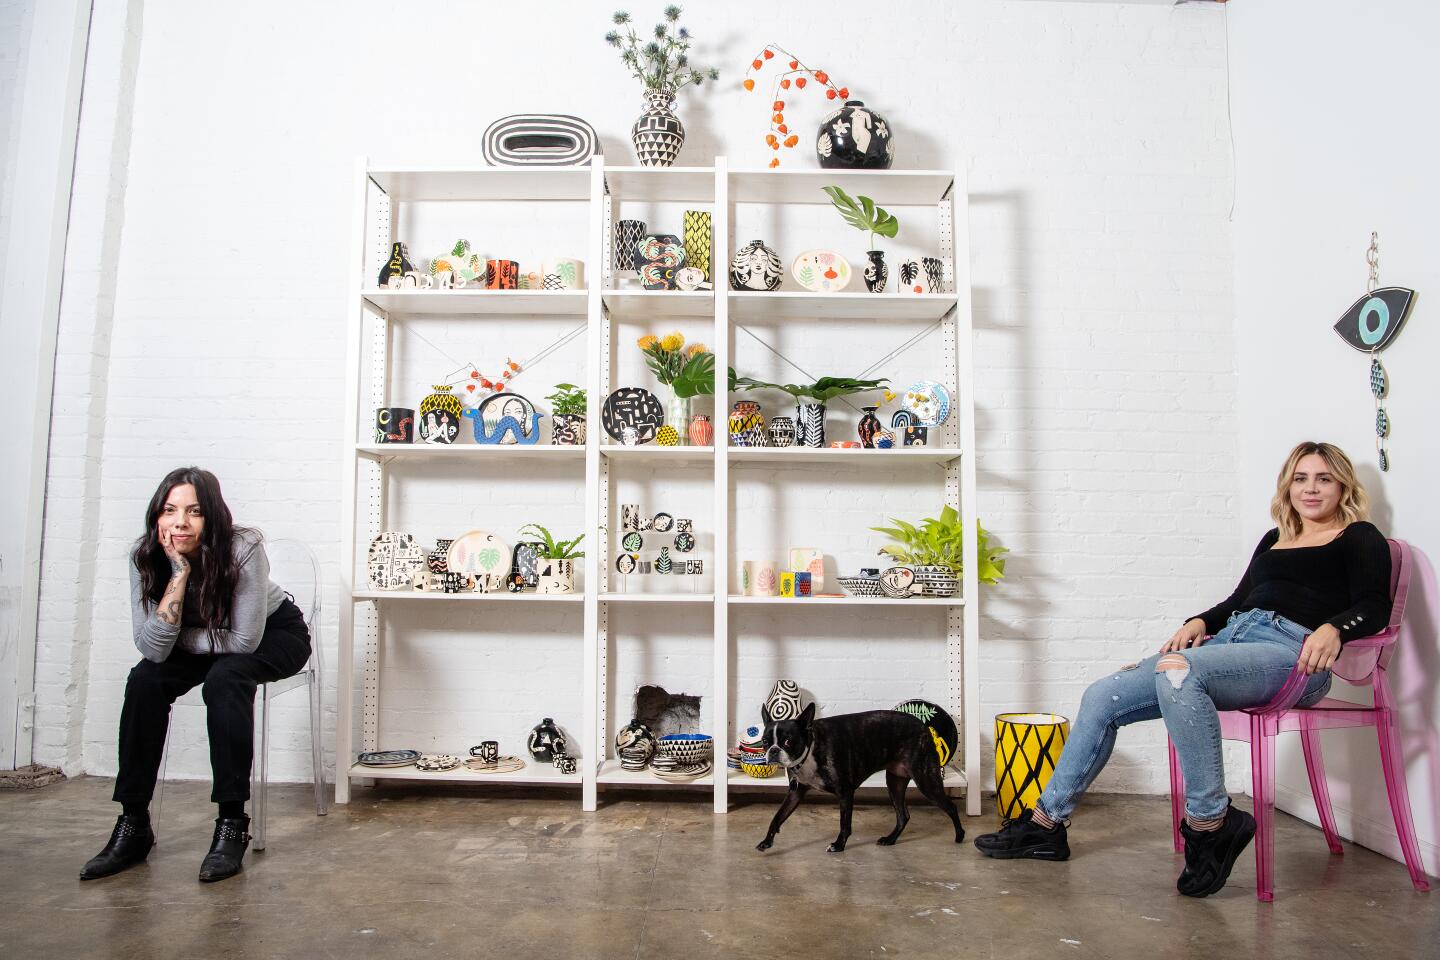 Phoebe Fisher, left, and Kristina Dove sit inside Kreep Ceramics. With them is Bijou the dog.